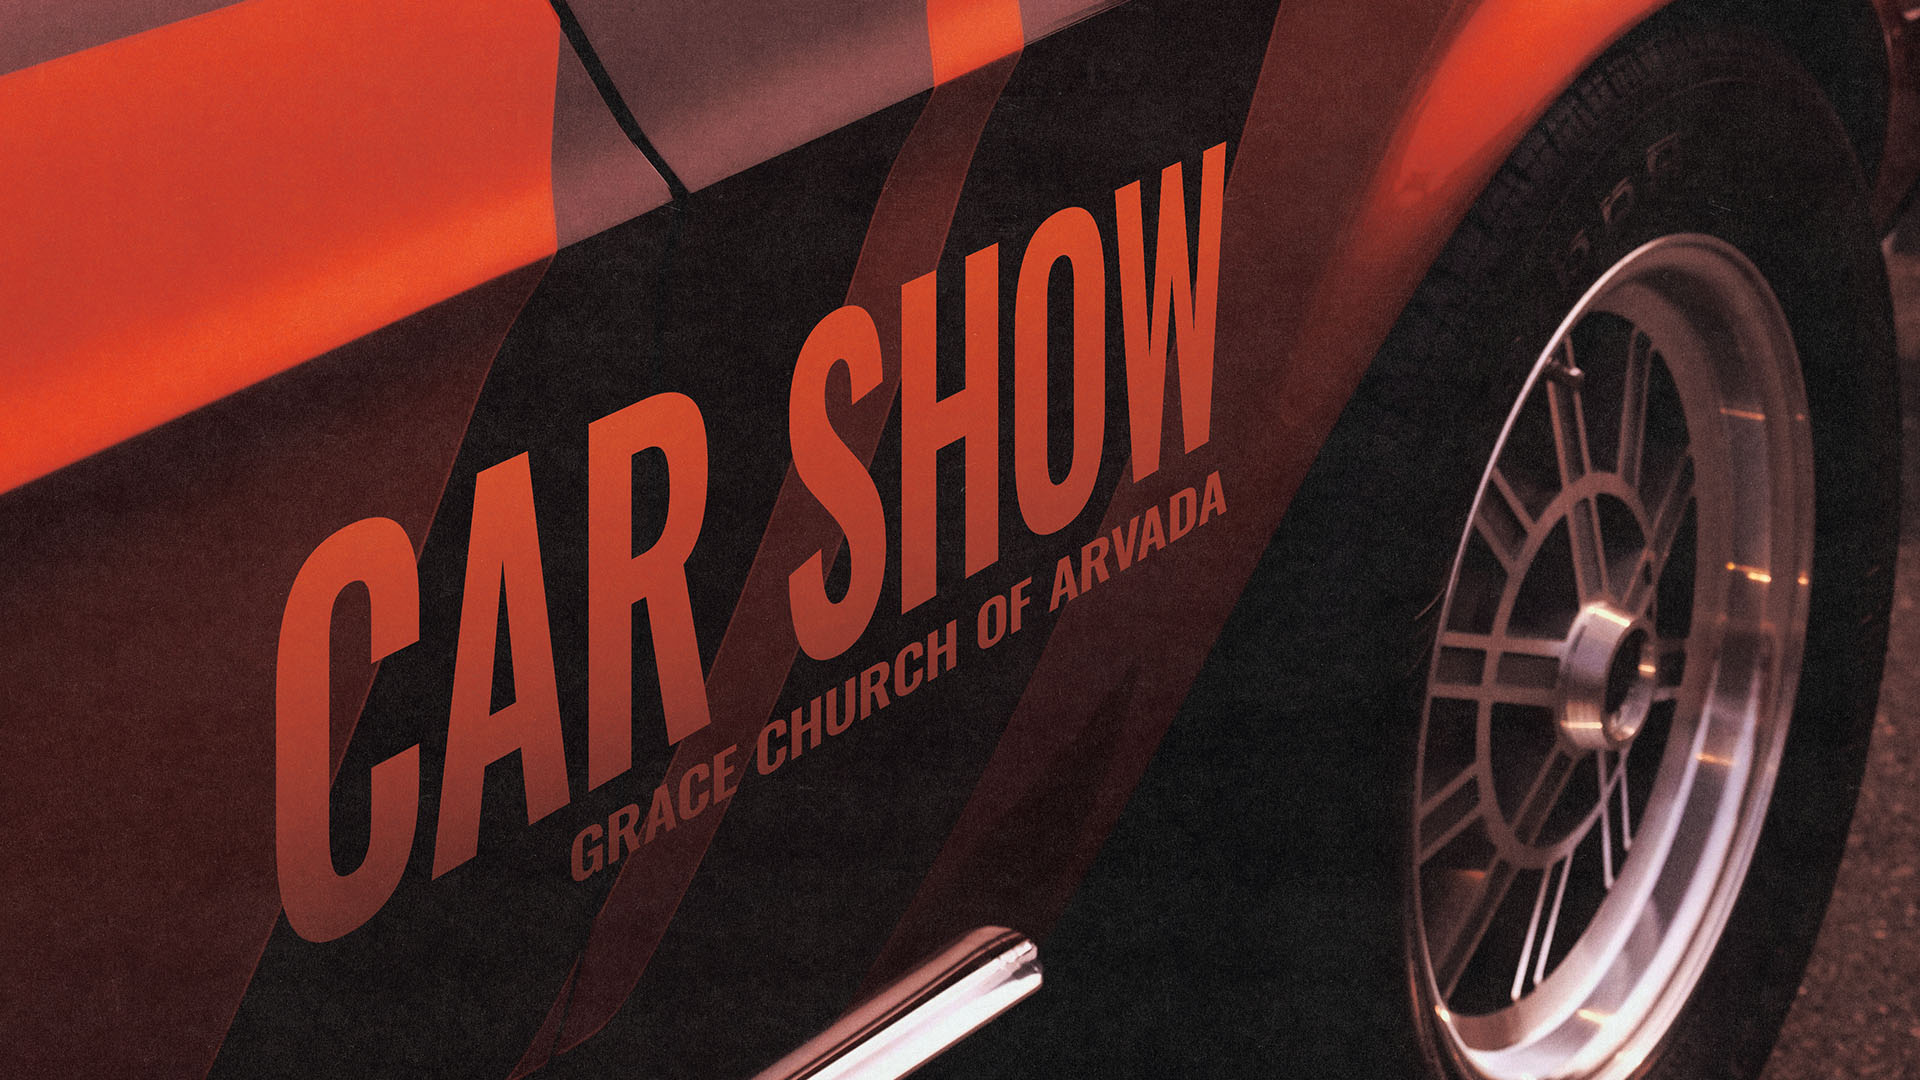 Car Show

Saturday | 9:00am - 1:00pm
September 7
